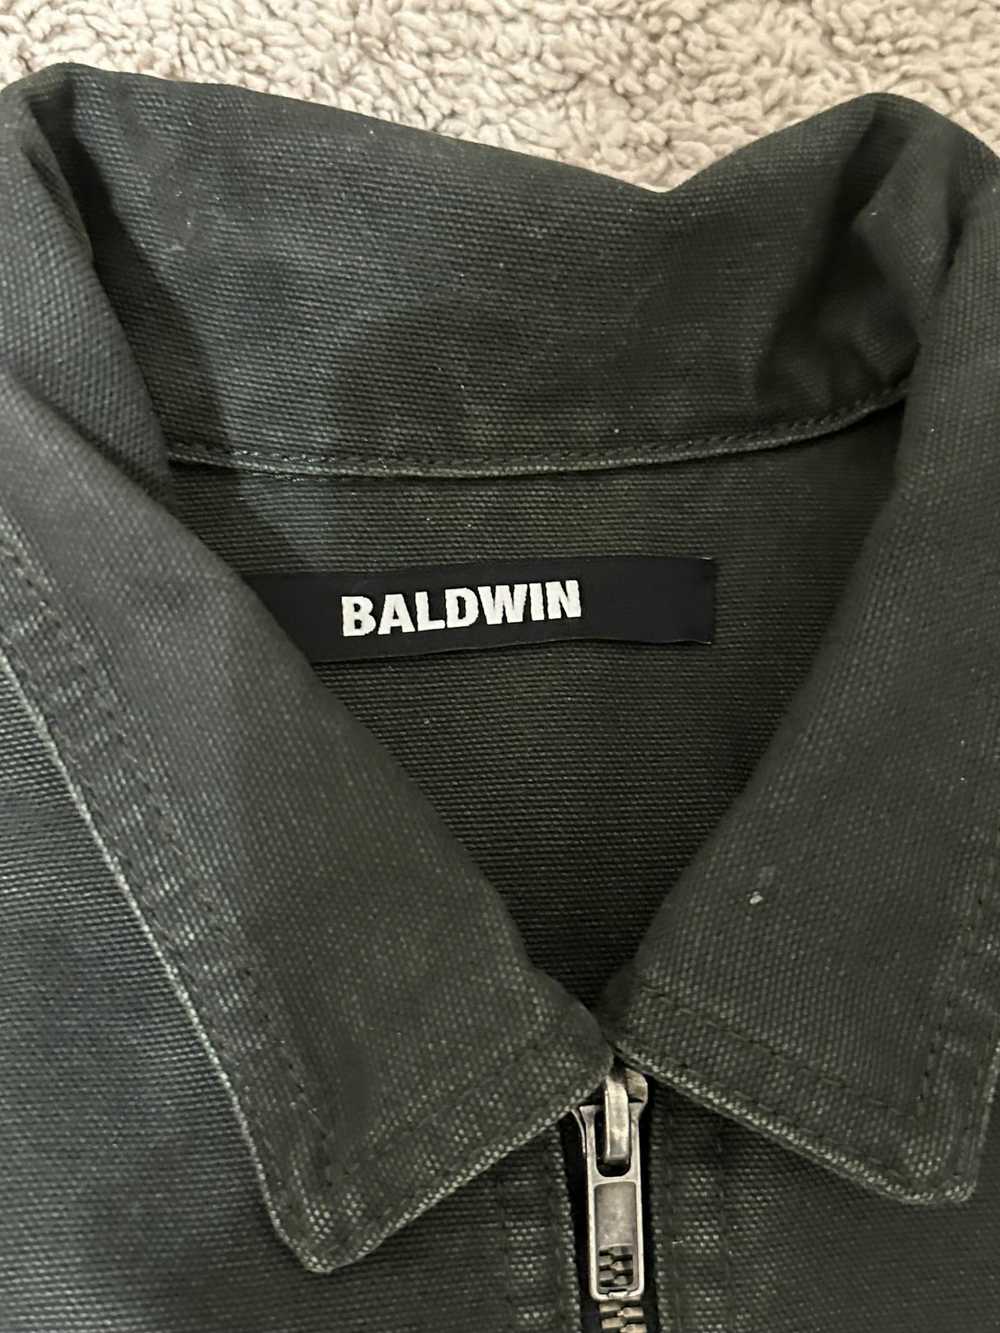 Baldwin Green trucker jacket - image 4